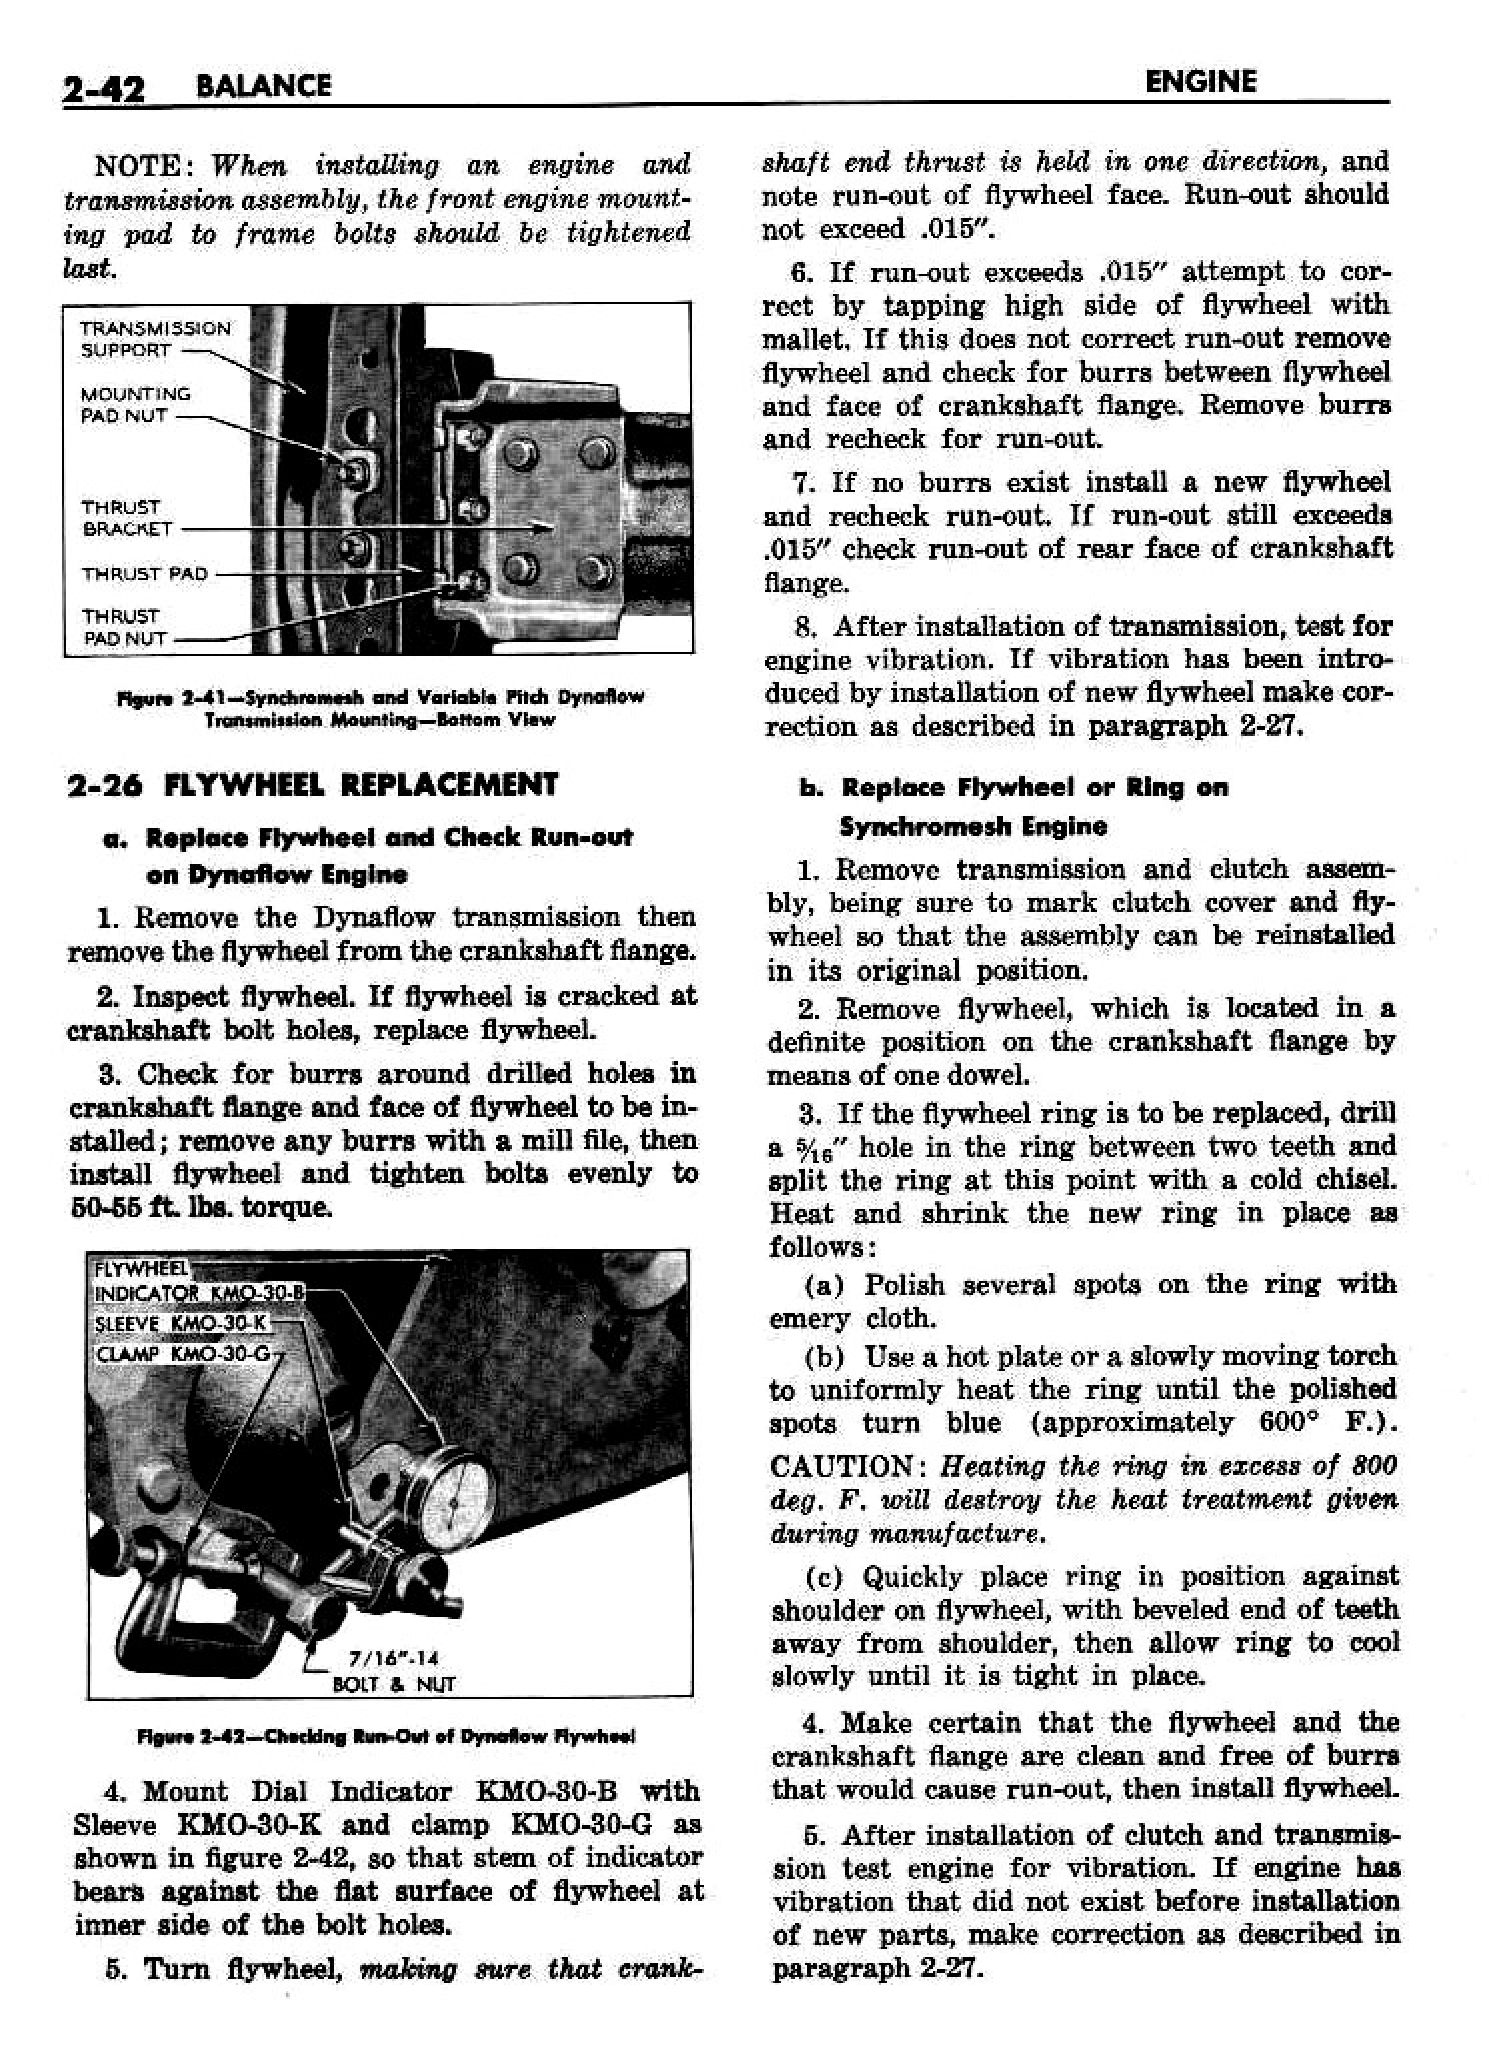 n_03 1958 Buick Shop Manual - Engine_42.jpg